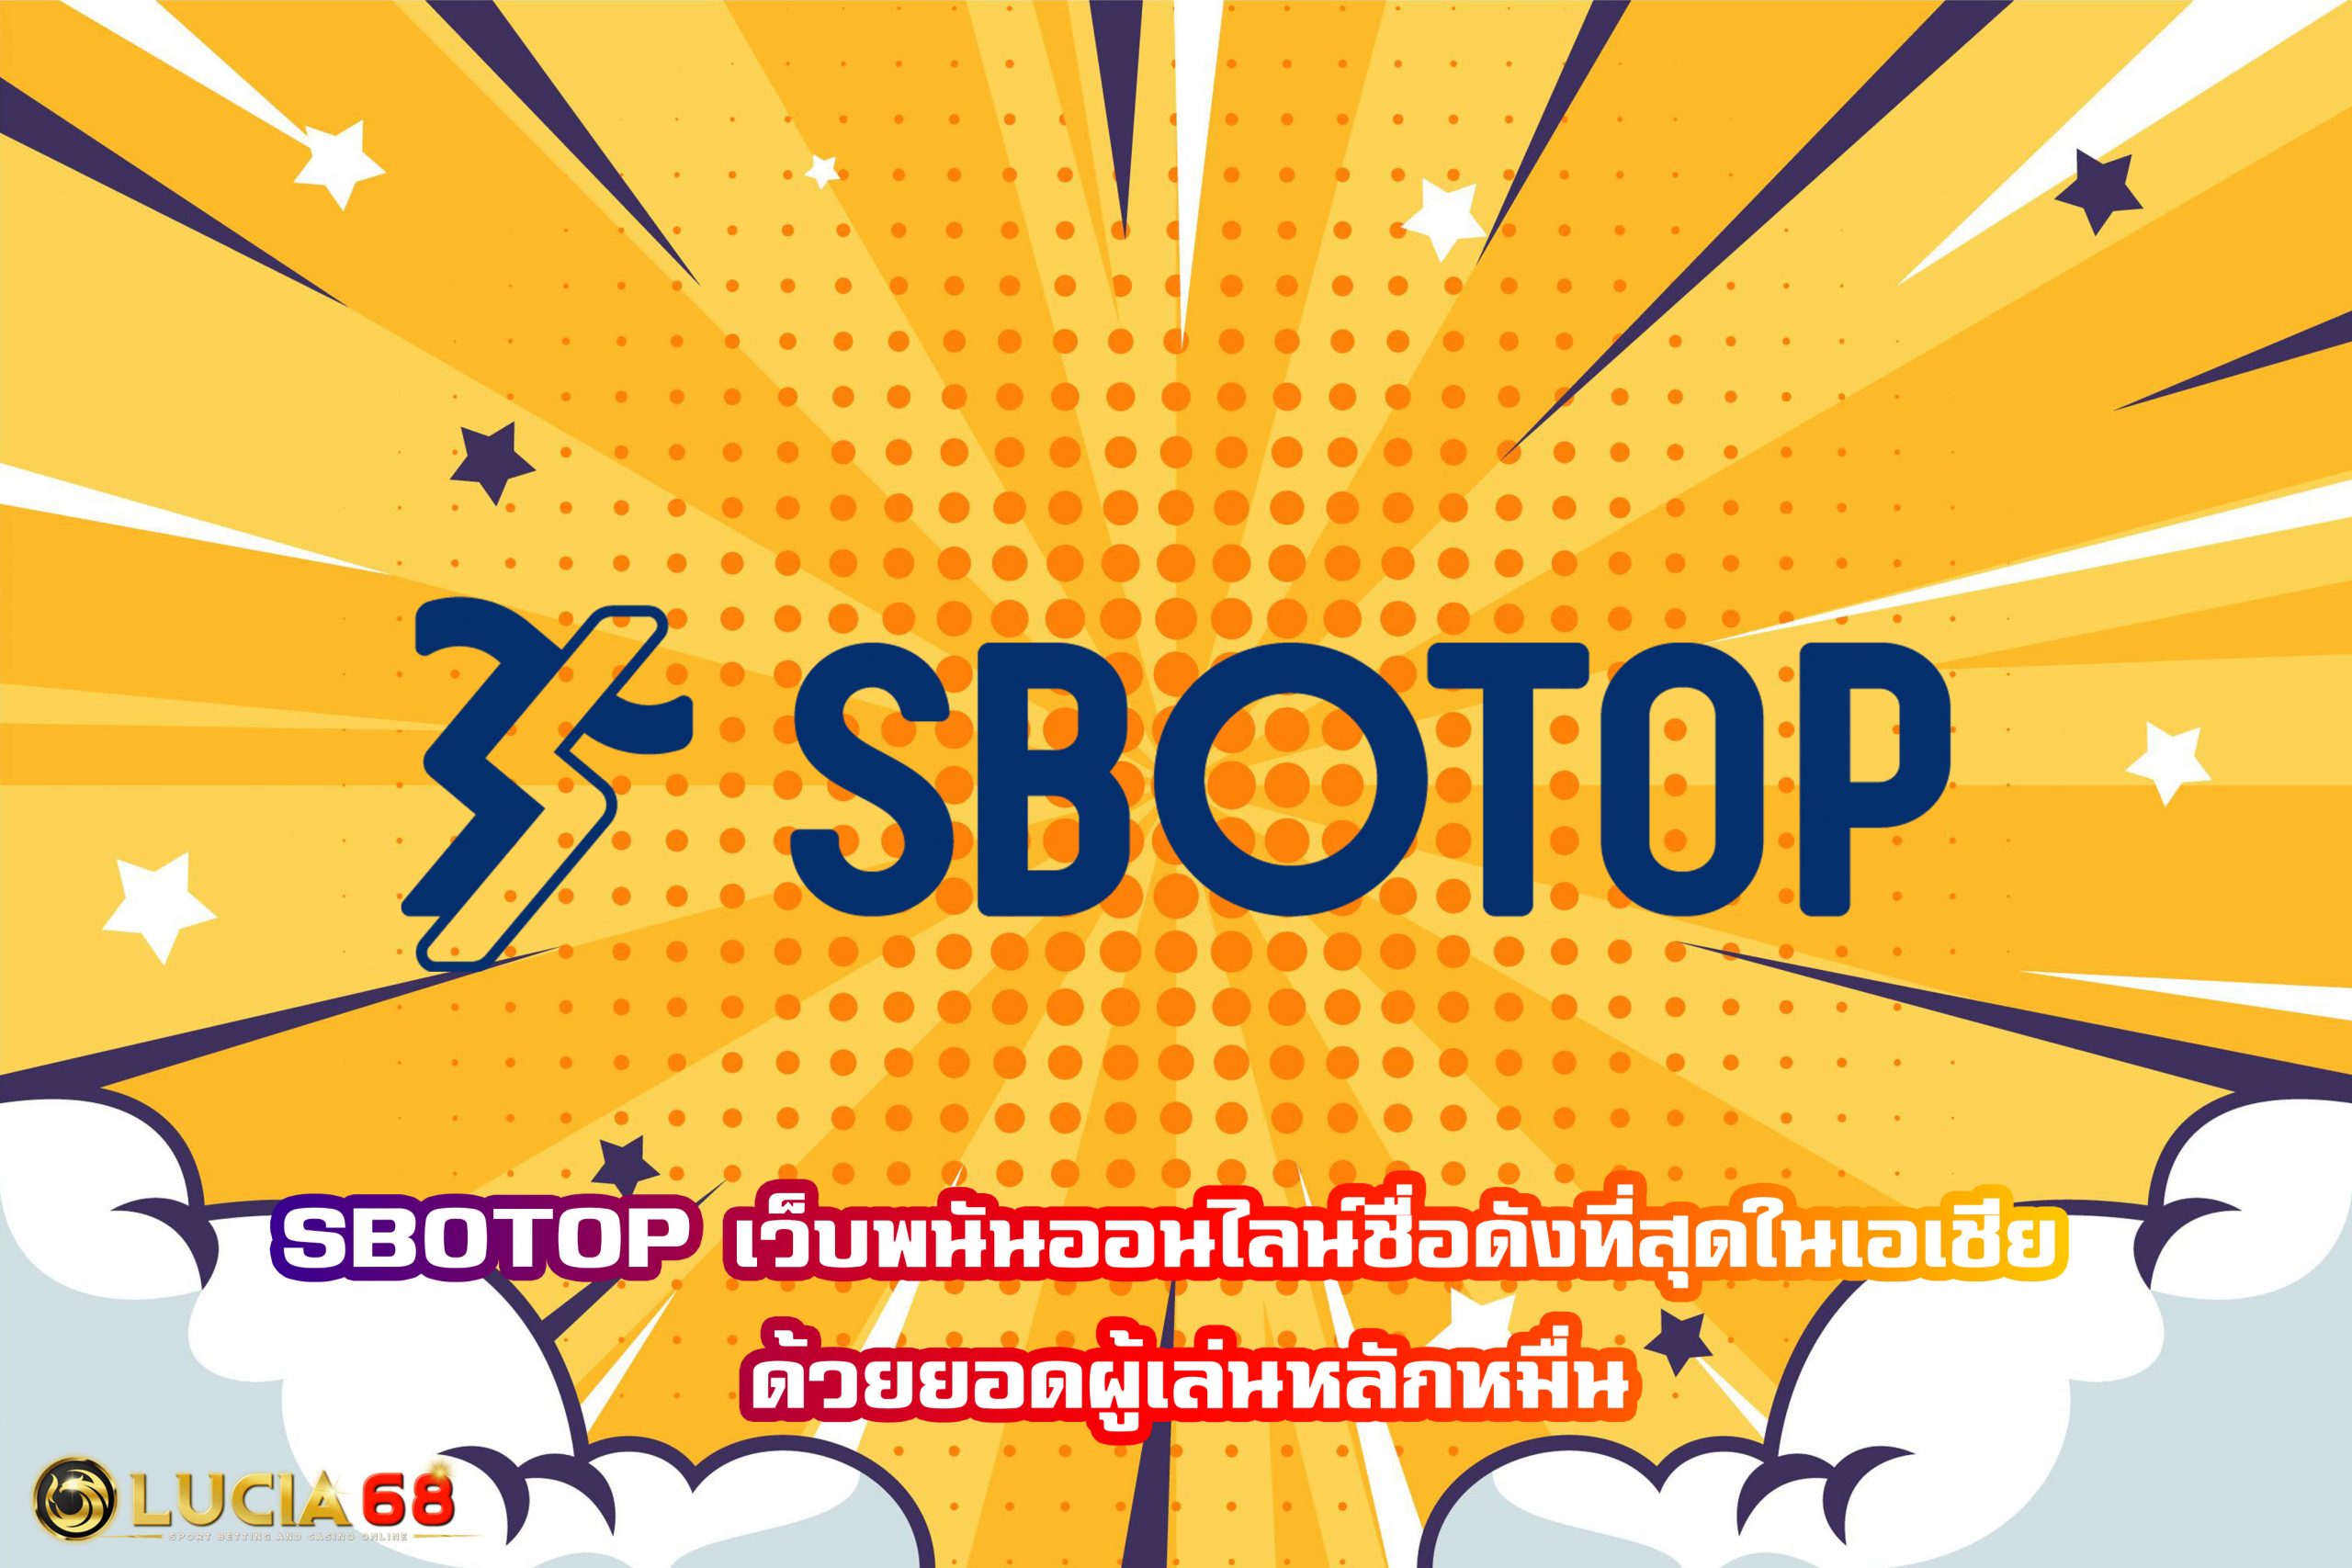 SBOTOP เว็บพนันออนไลน์ชื่อดังที่สุดในเอเชีย ด้วยยอดผู้เล่นหลักหมื่น